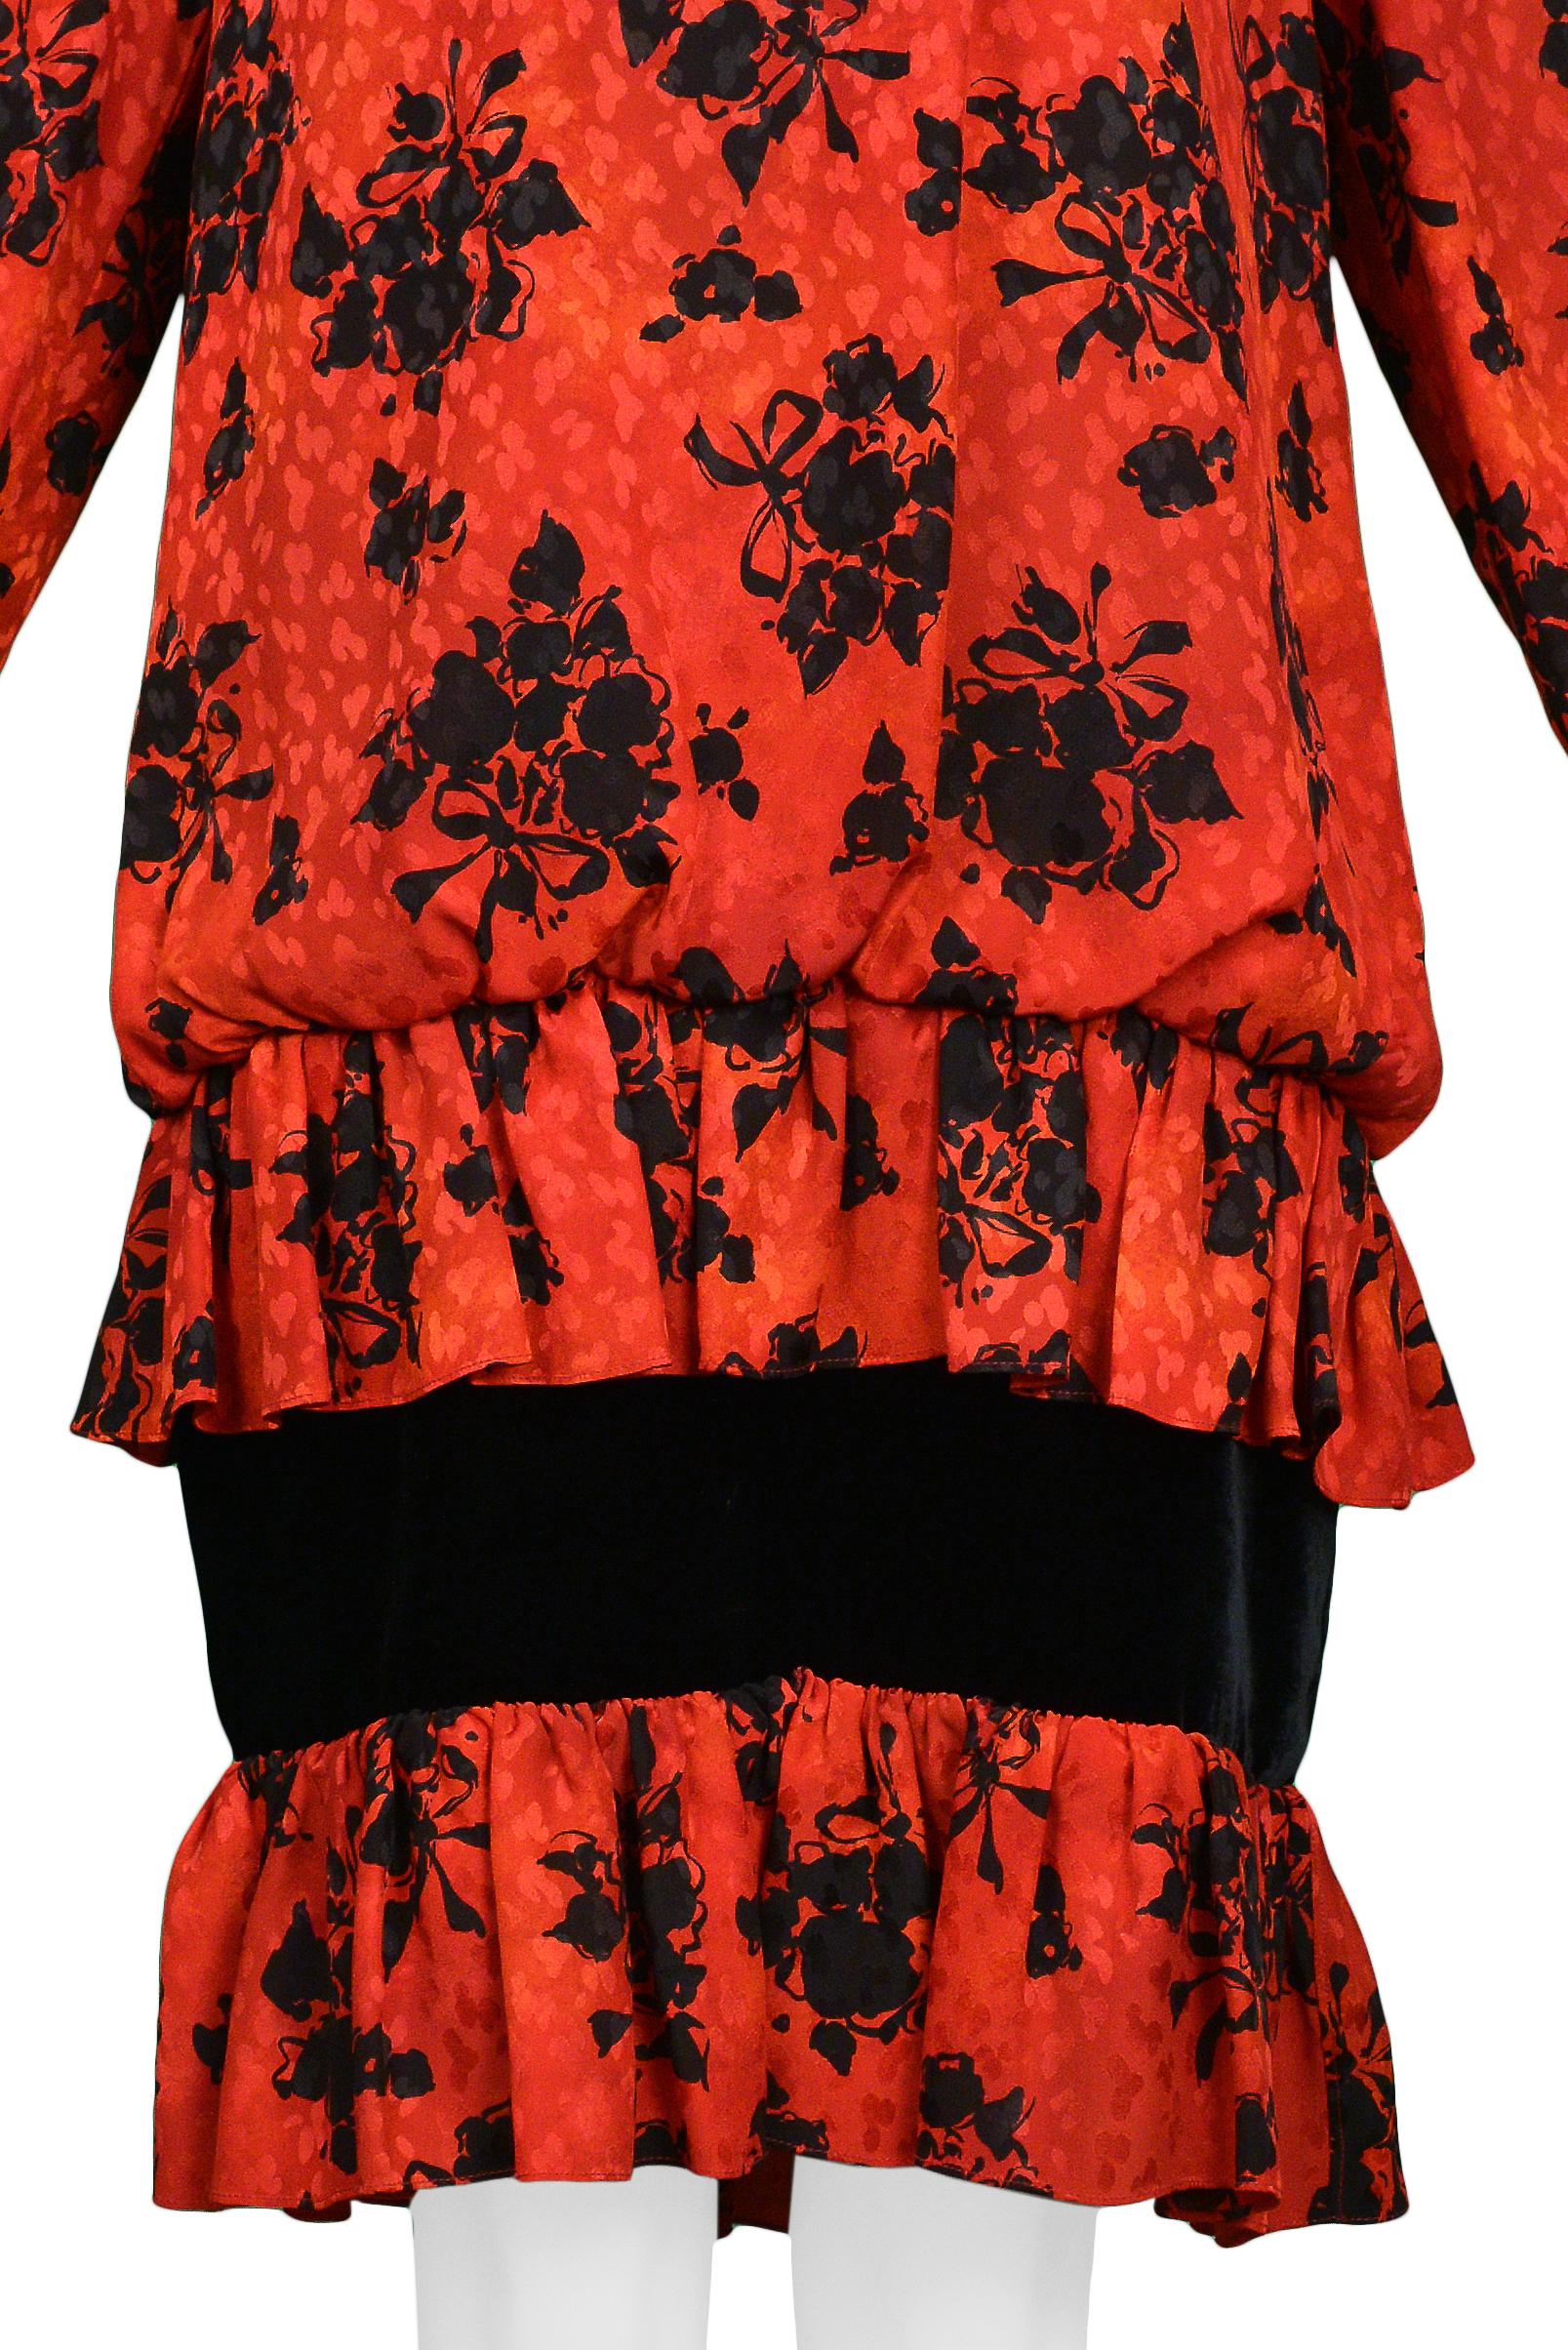 Vintage Yves Saint Laurent Red & Black Floral Print Drop Dress For Sale 1